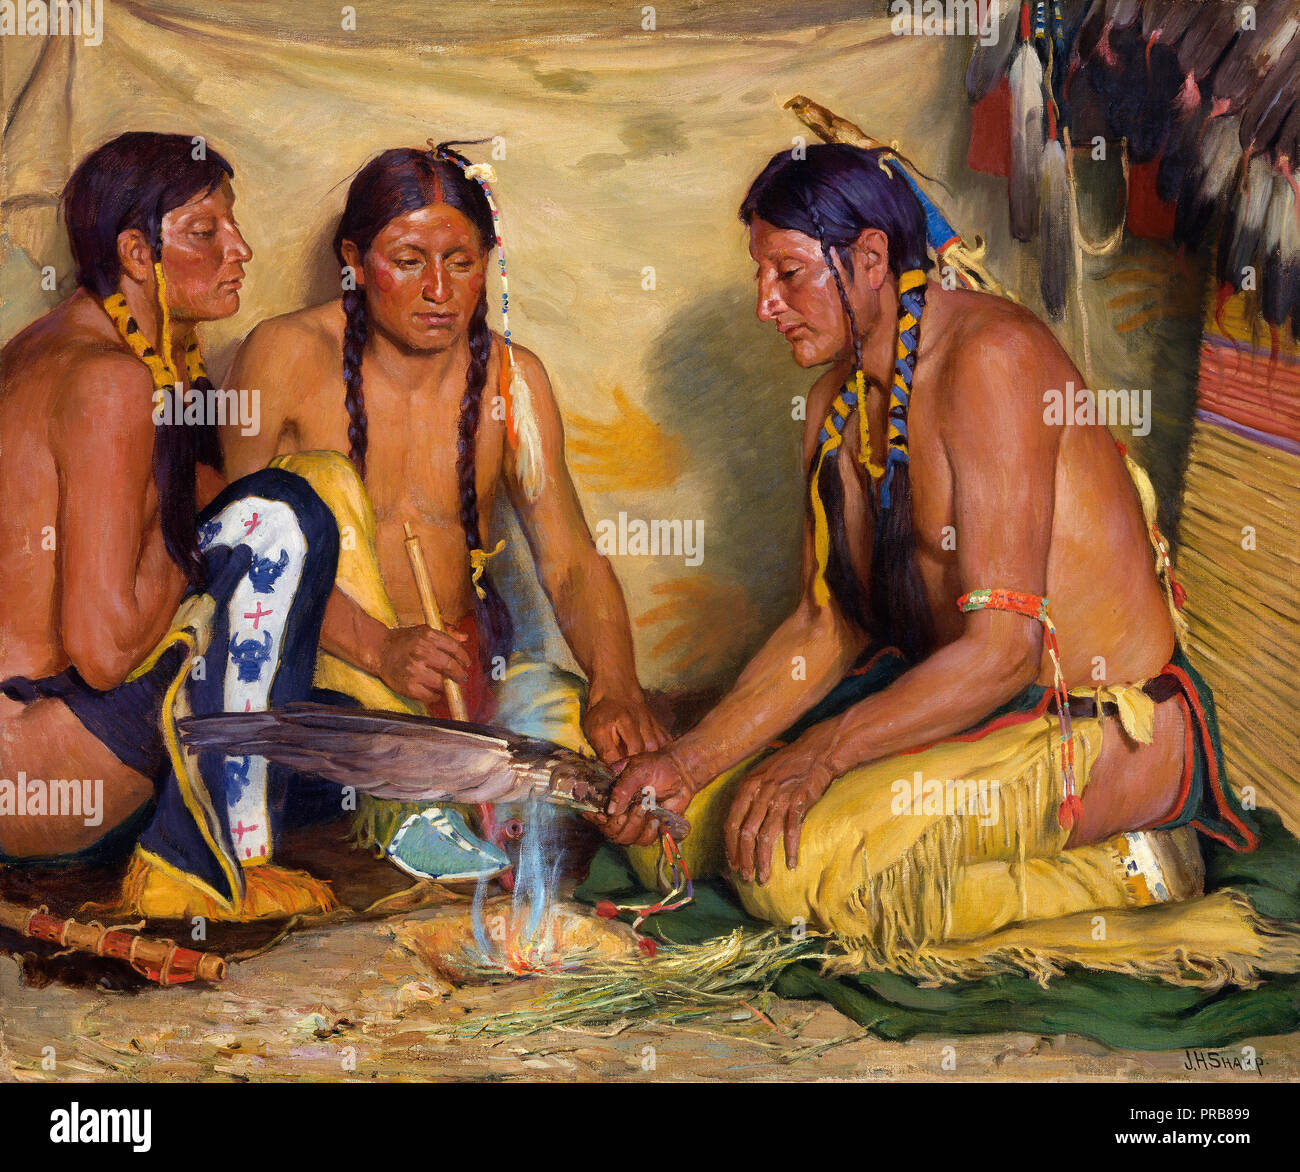 Joseph Henry Sharp, Sweet Grass Medizin, Blackfoot Zeremonie, ca. 1920 Öl auf Leinwand, Smithsonian American Art Museum, Washington, D.C., USA. Stockfoto